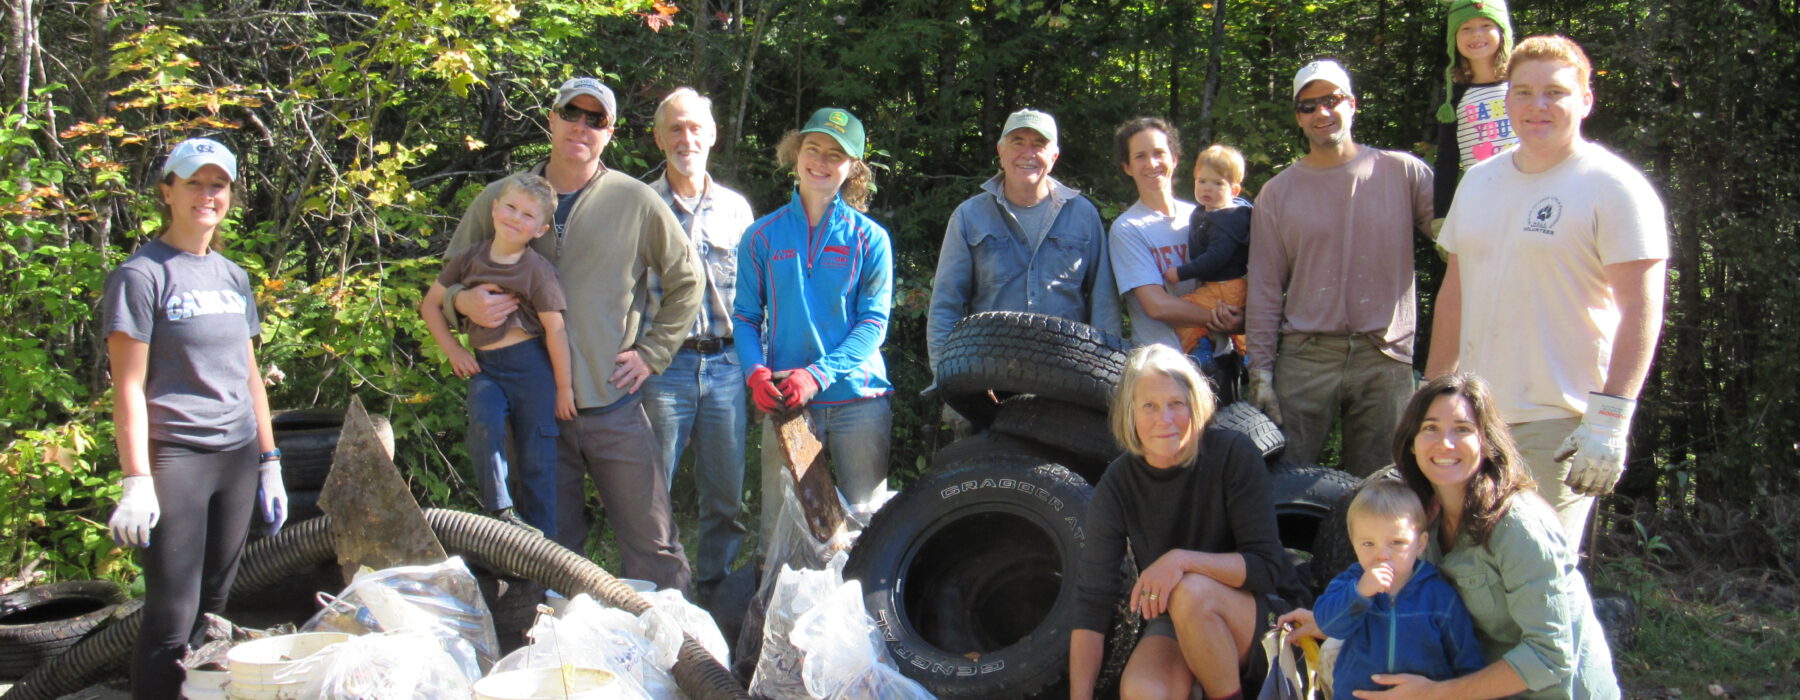 Vermont river clean up crew